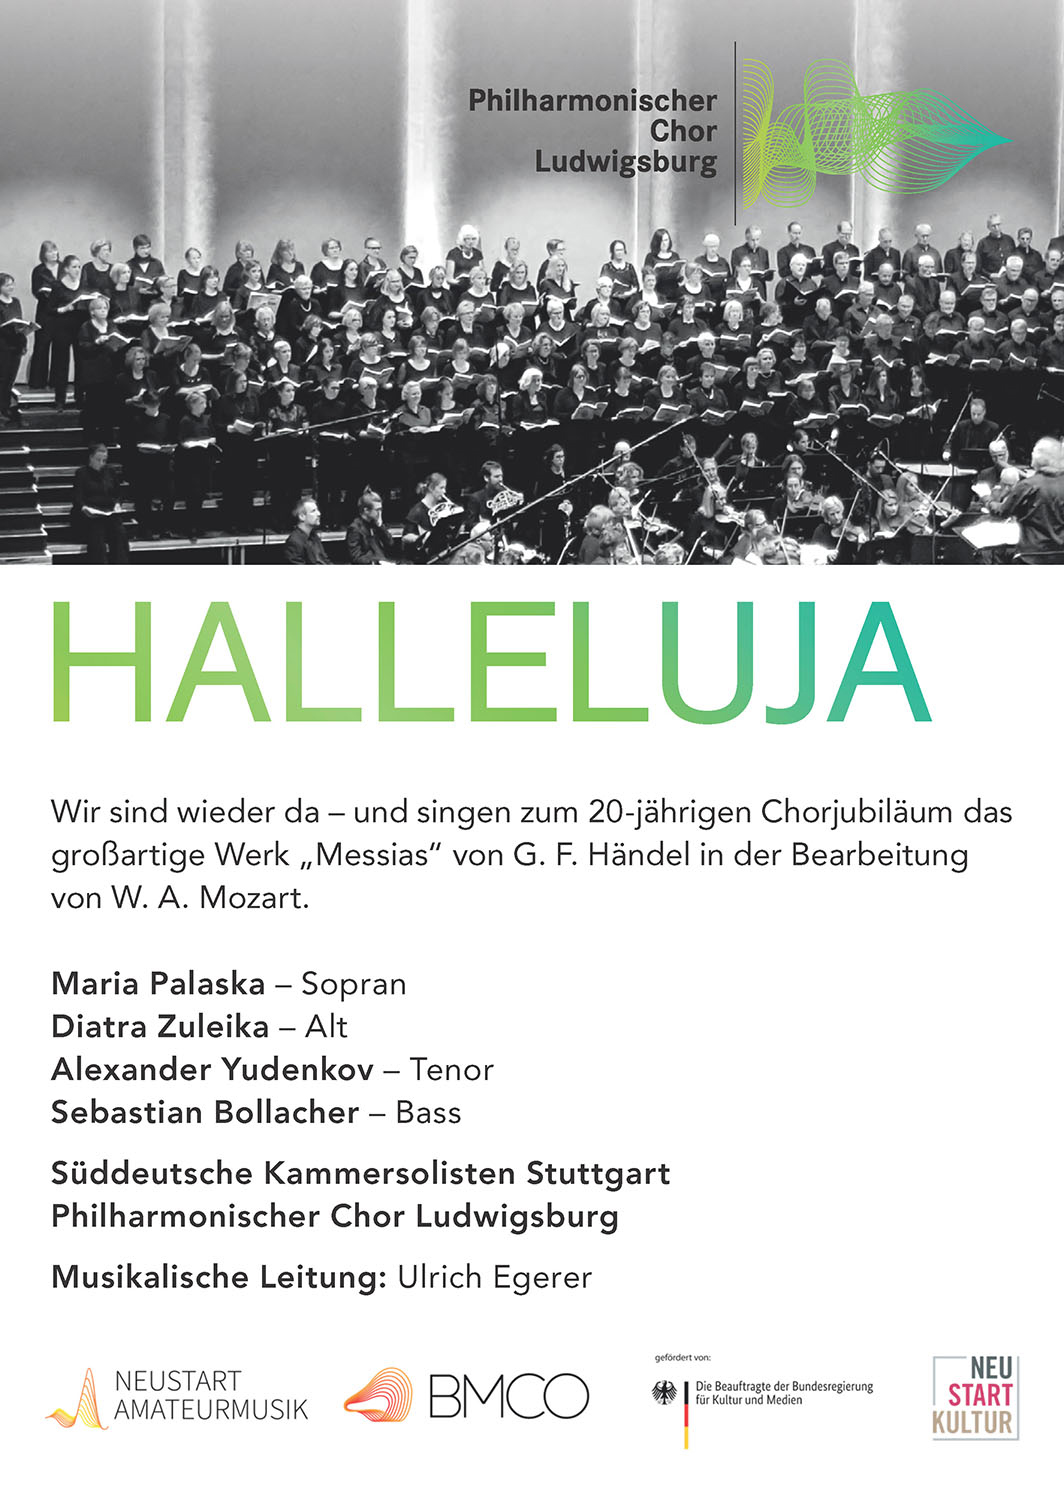 (c) Philharmonischer Chor Ludwigsburg e.V.